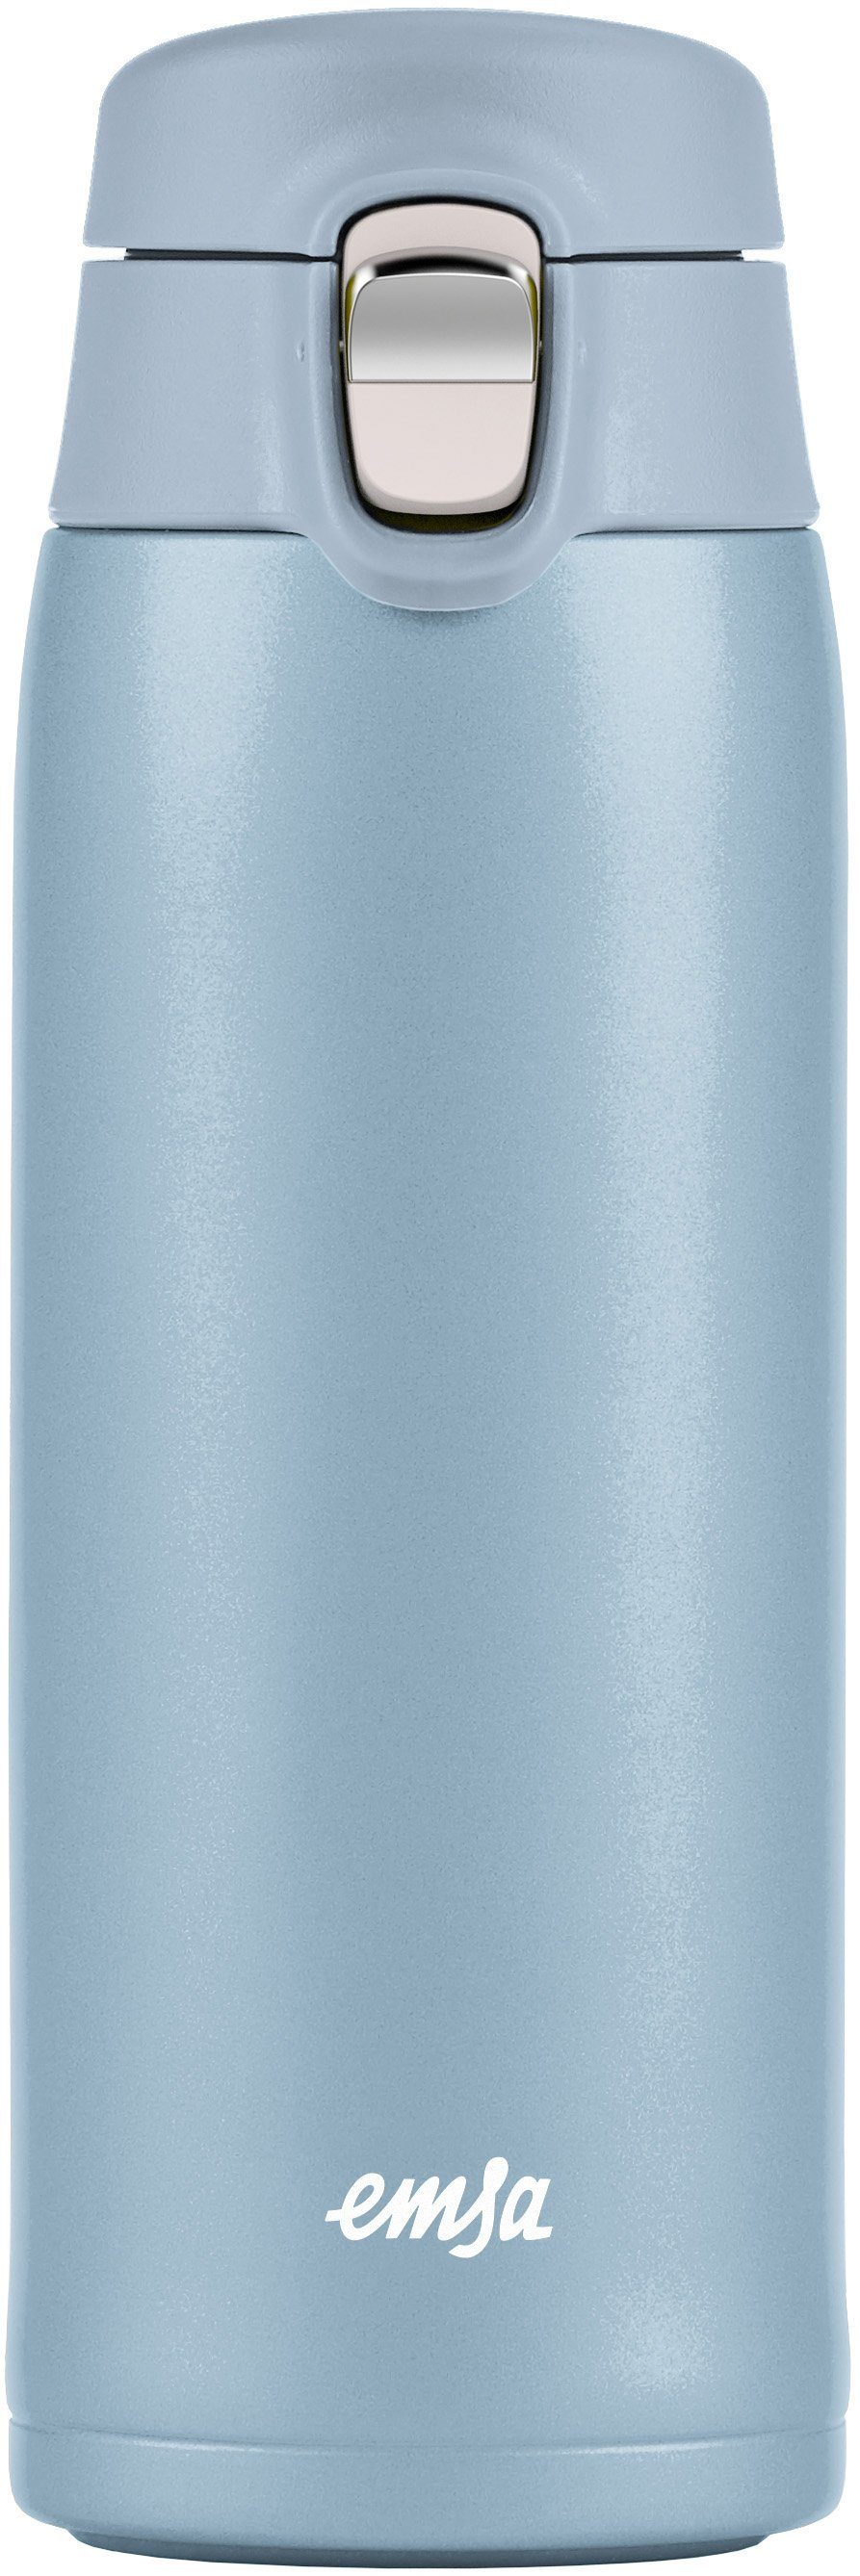 Emsa Thermobecher Travel Mug Light, leicht, Edelstahl, Edelstahl, Kunststoff, kalt dicht, 100% 0,4L, heiß/16h Klappverschluss, 8h